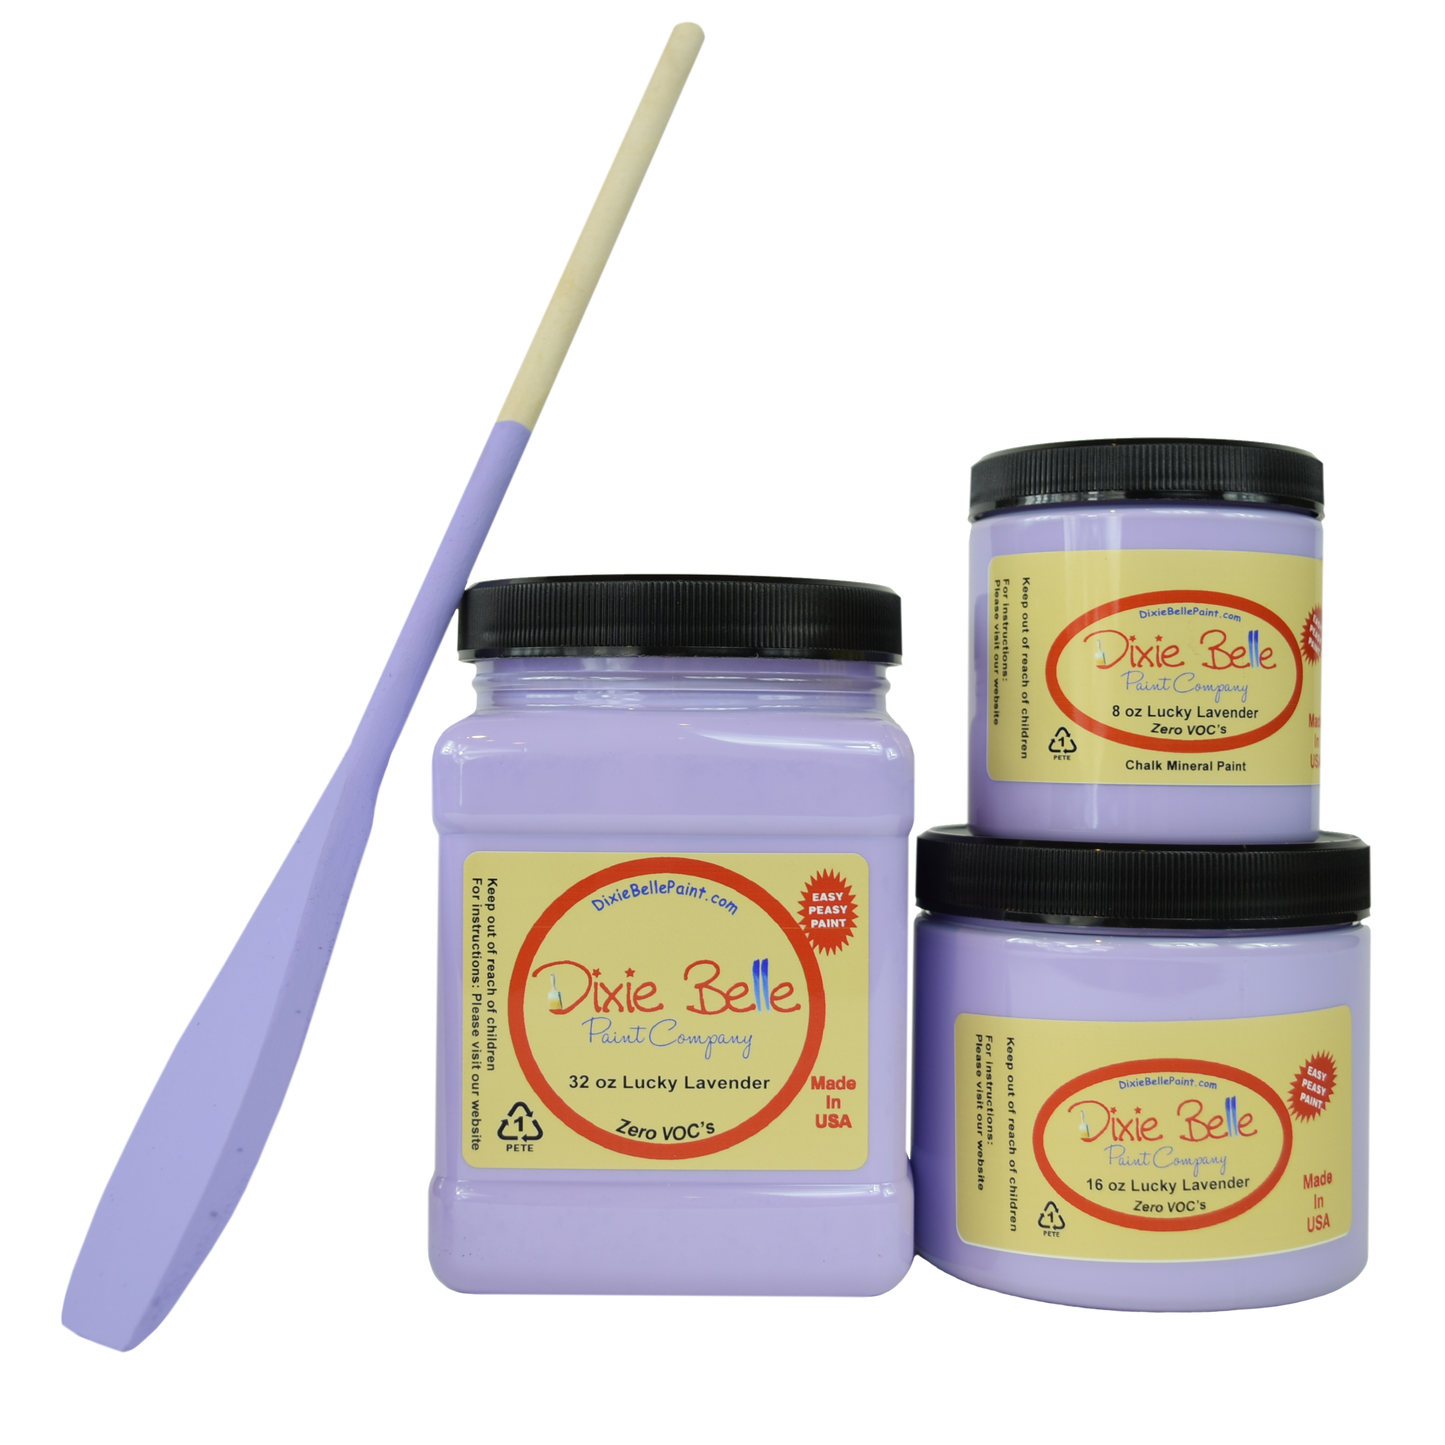 Dixie Belle Chalk Mineral Paint - Lucky Lavender